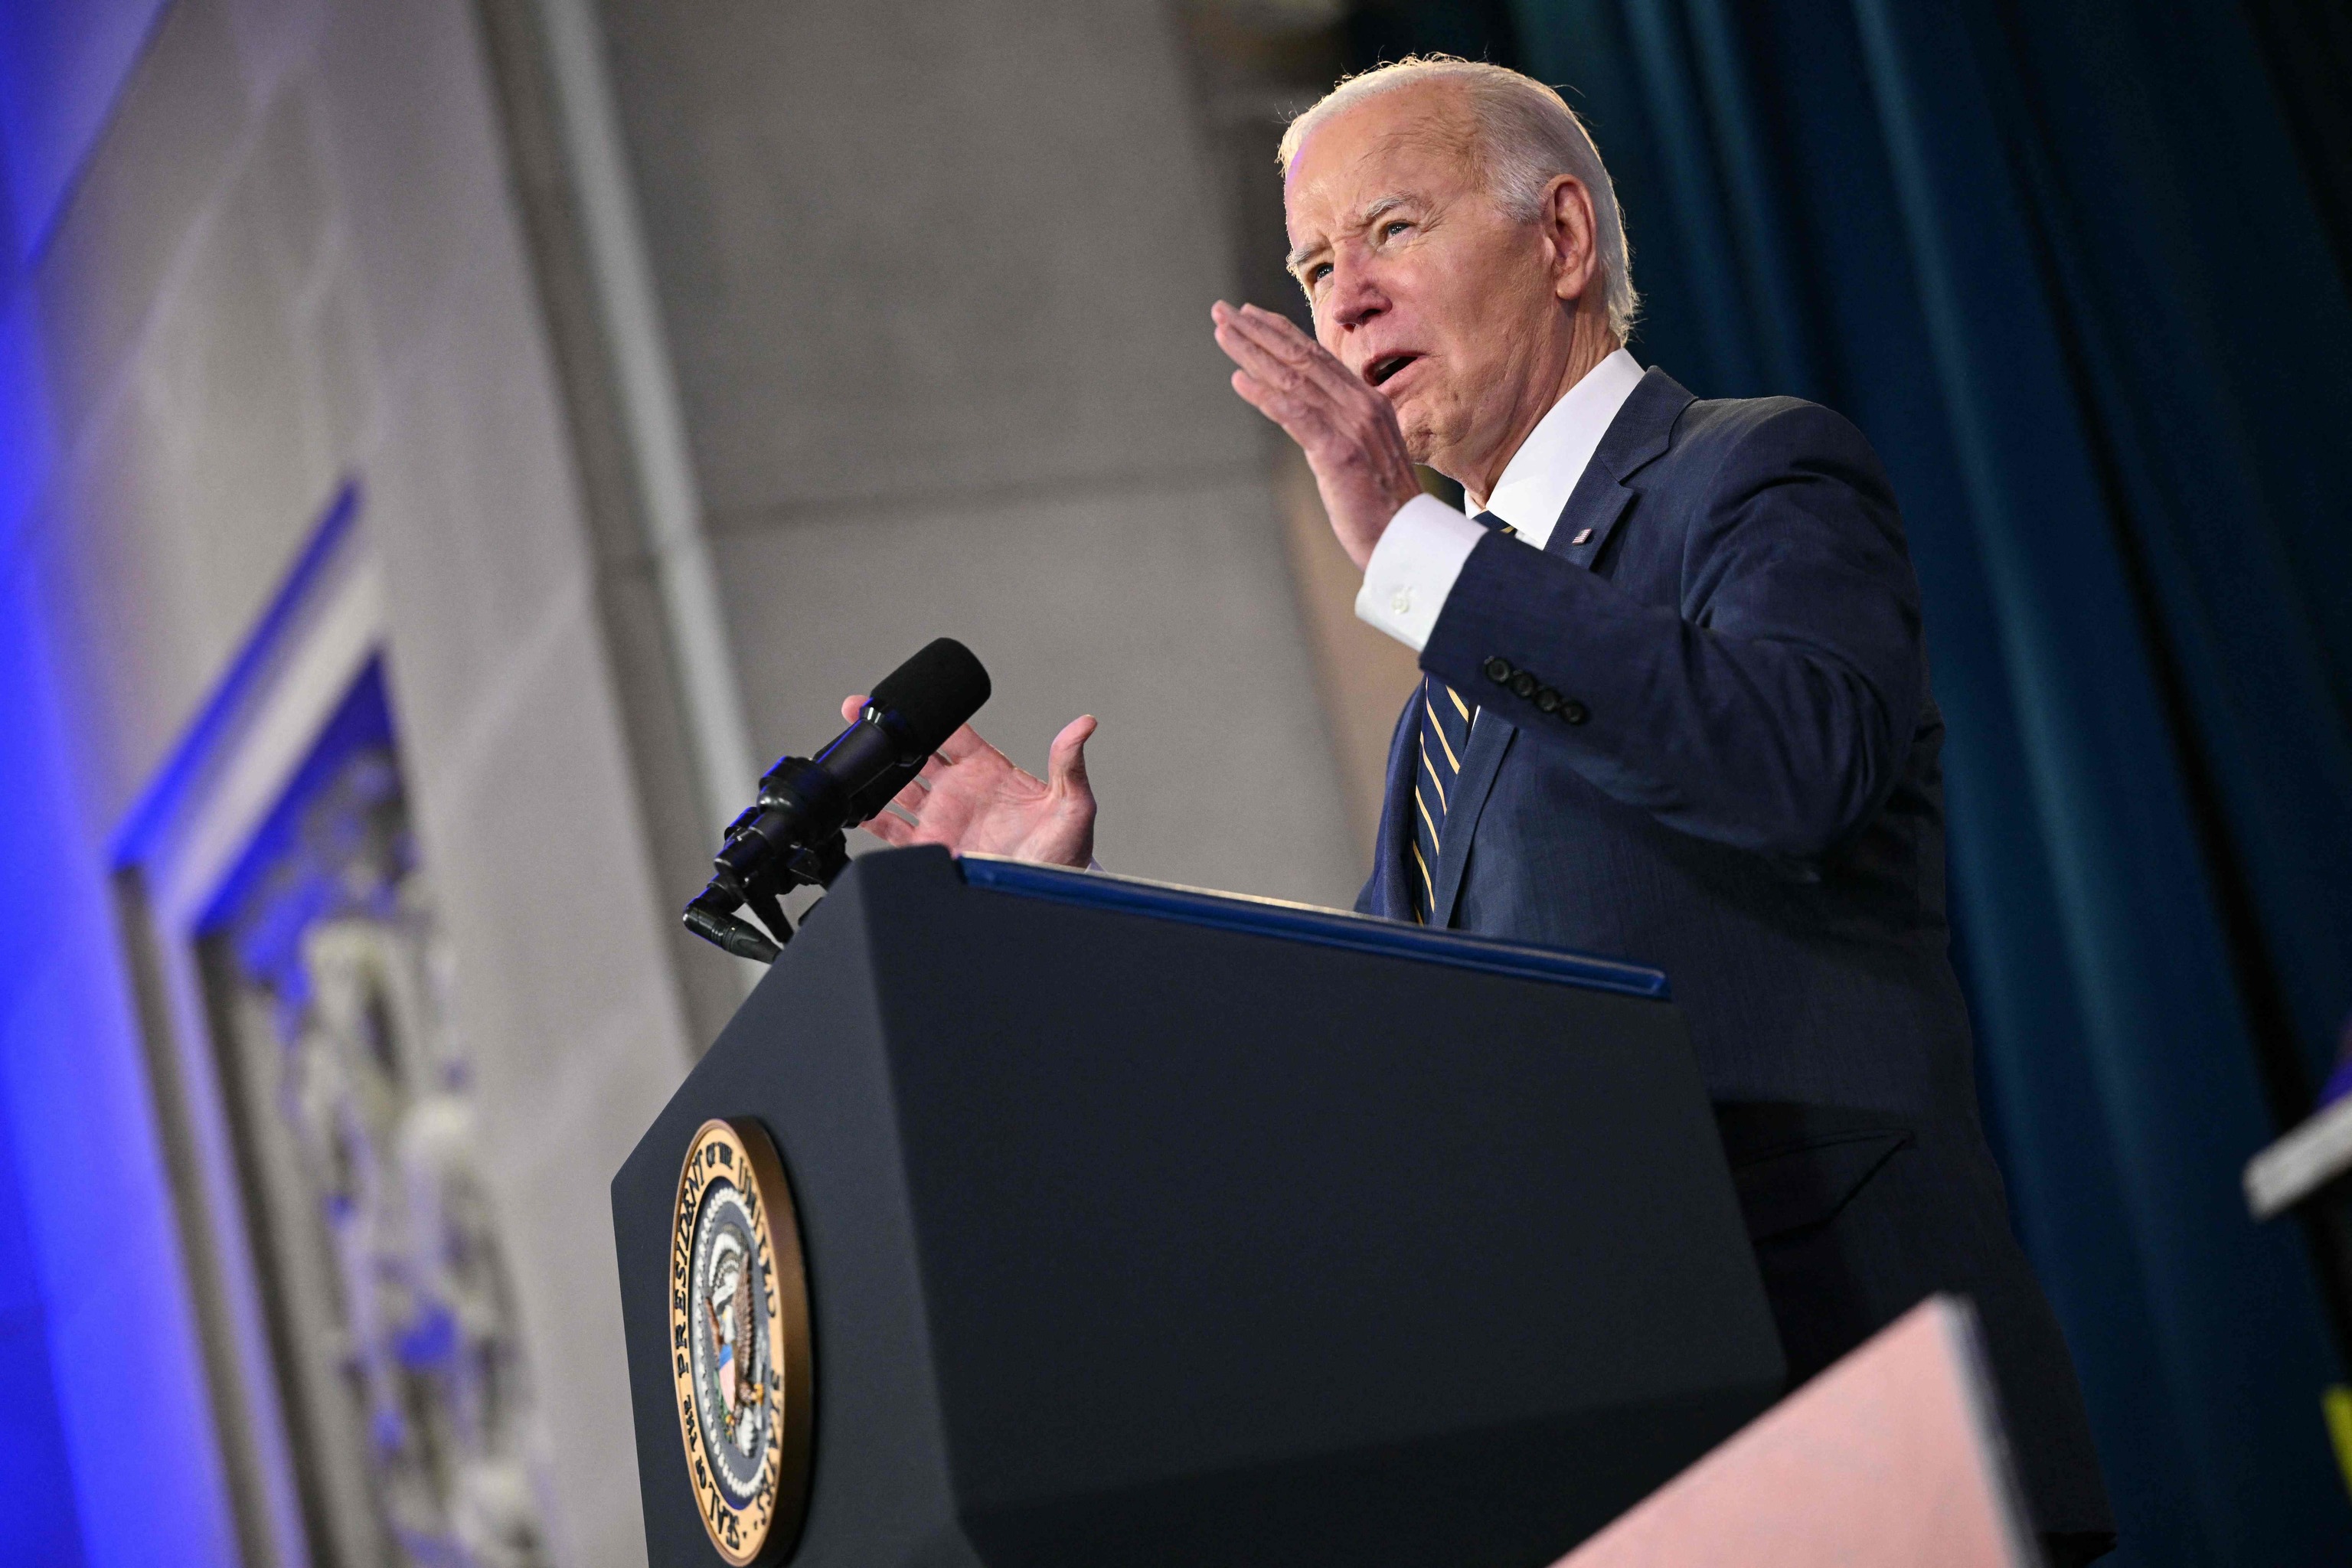 Biden in his appearance on Ukraine.